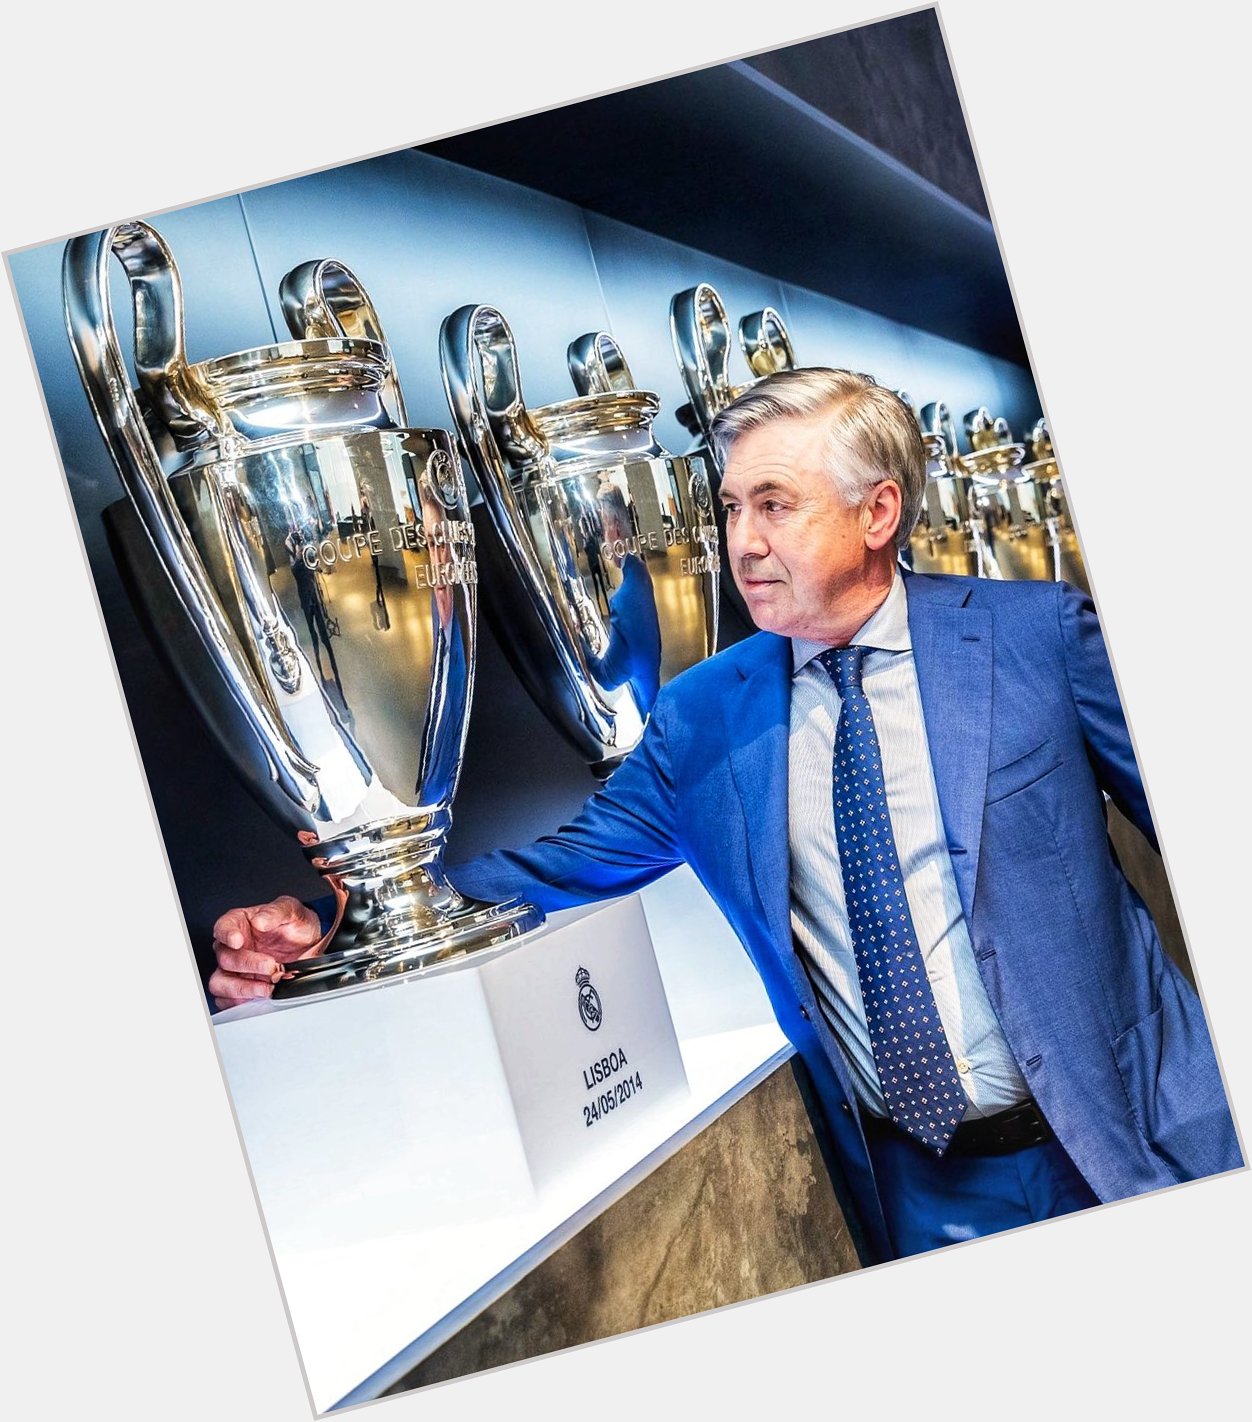 Happy birthday to Carlo Ancelotti who turned 62 today!  